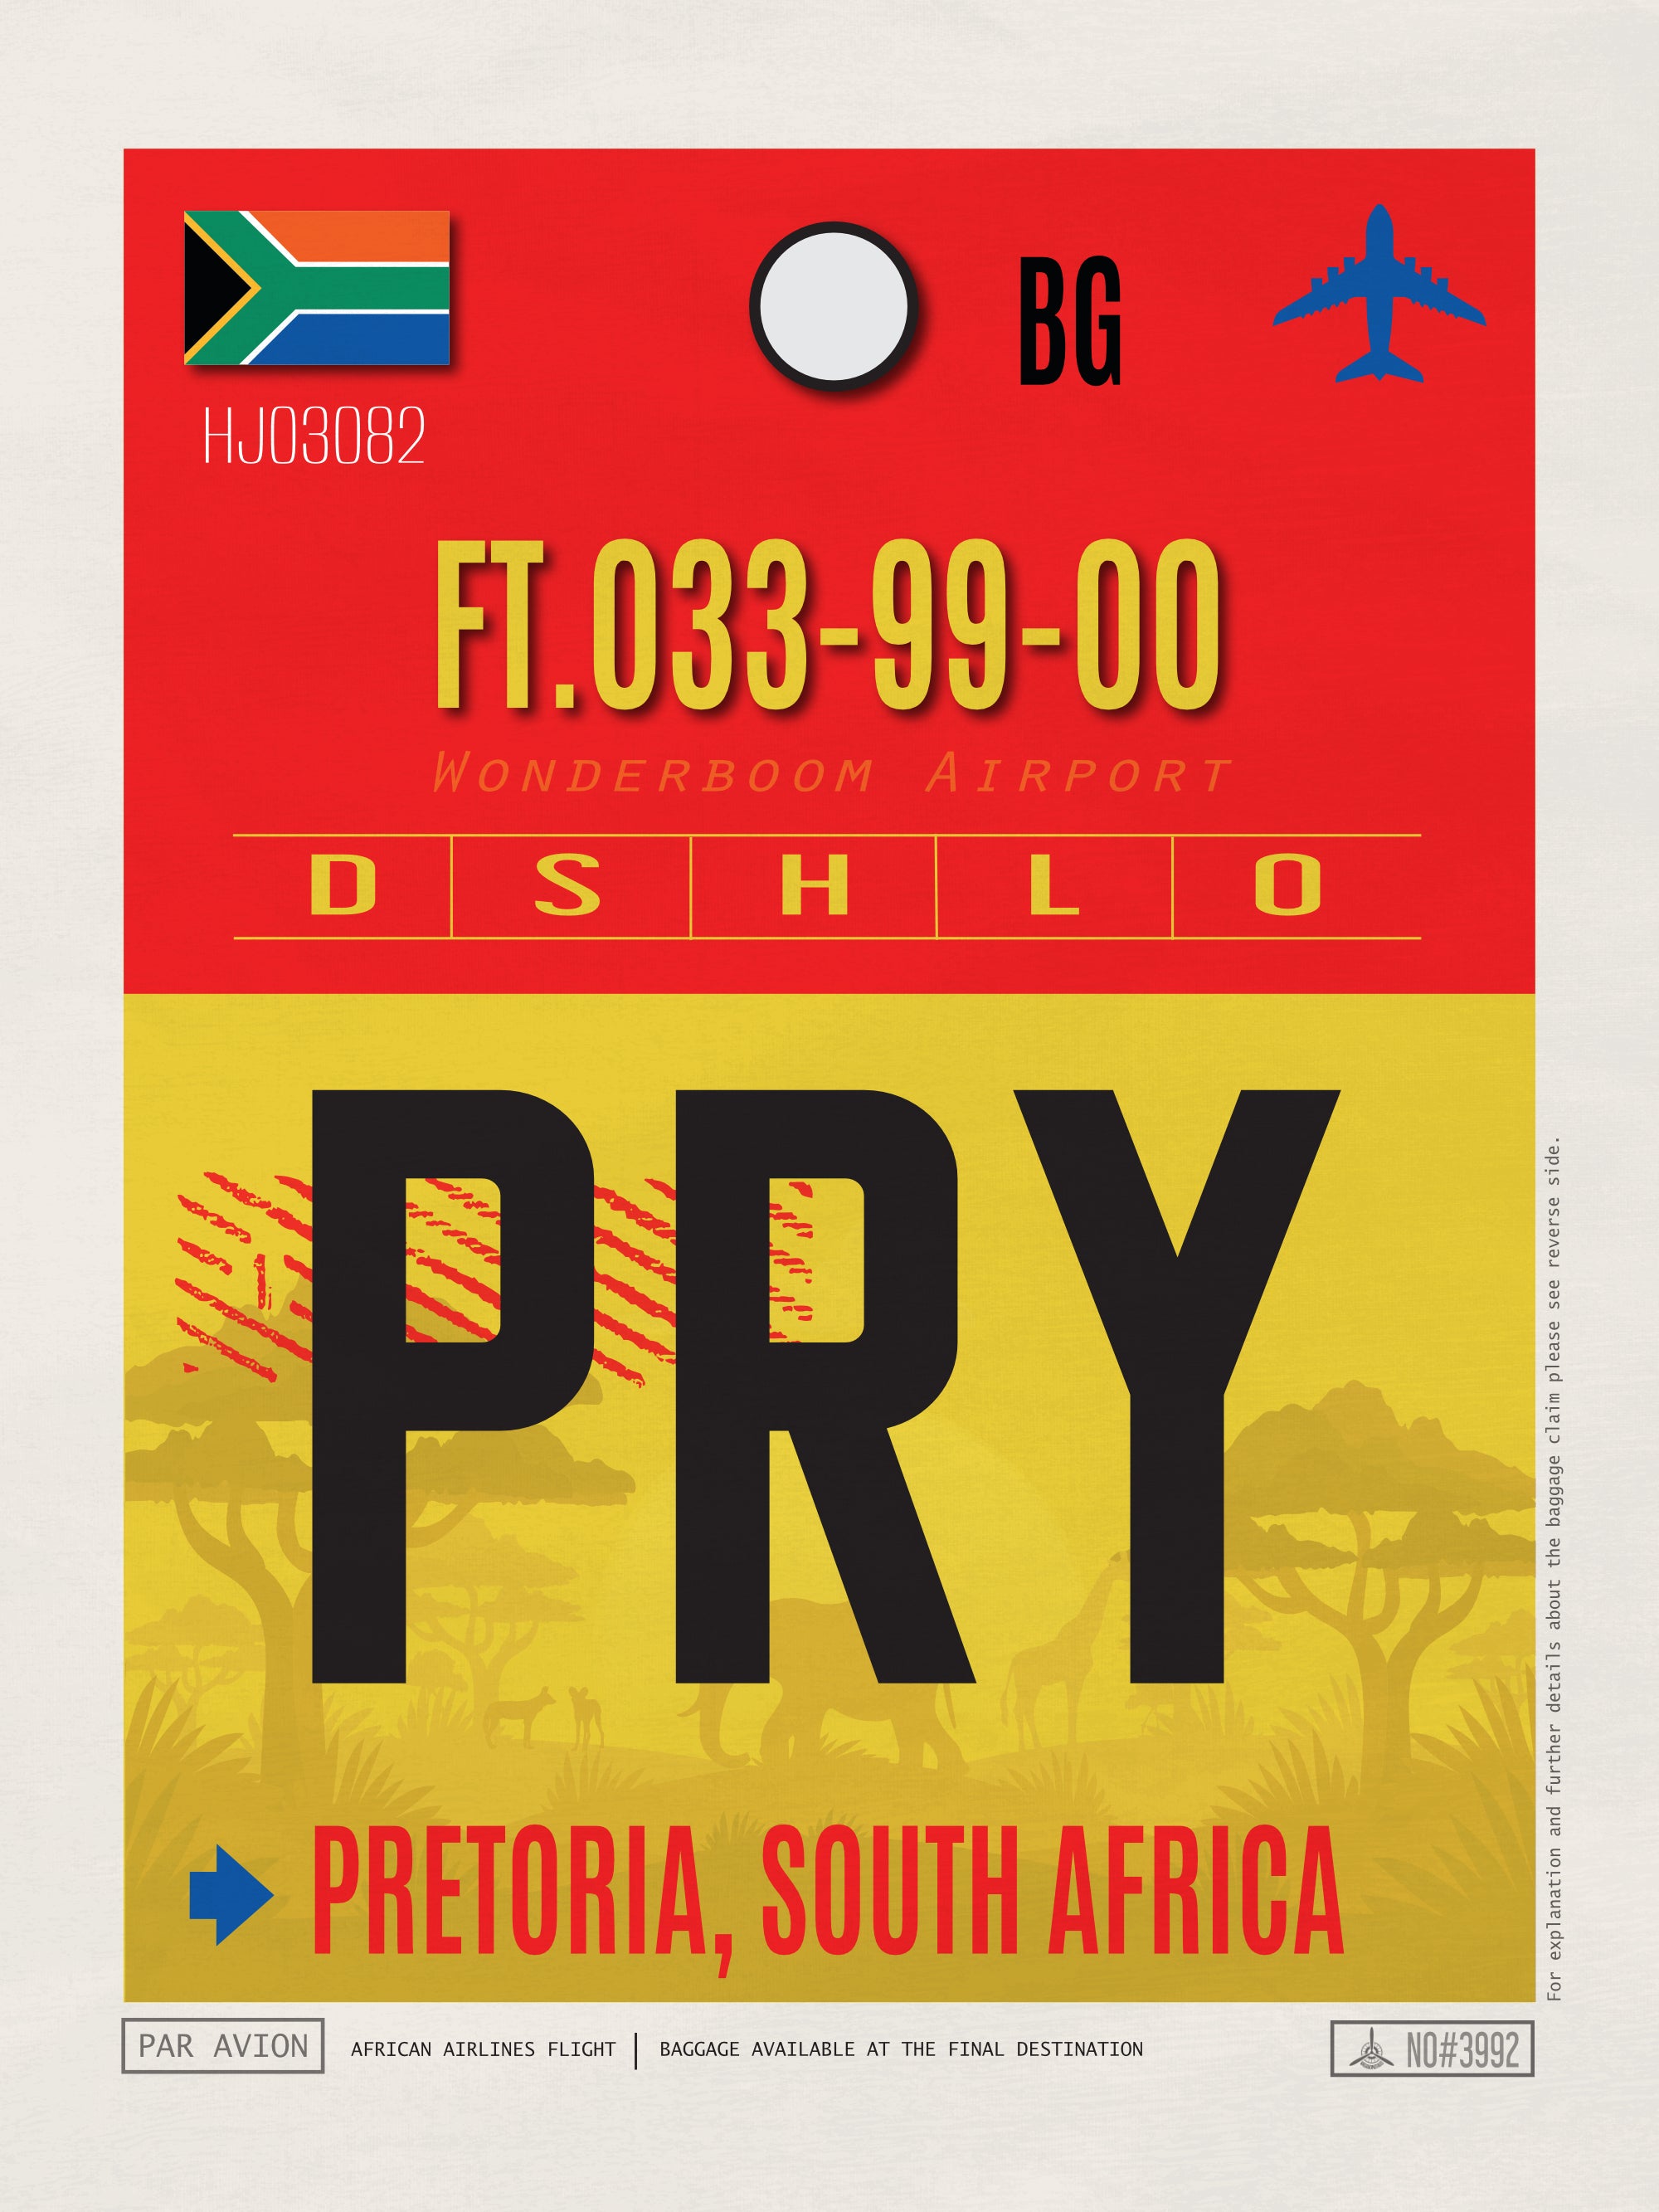 Pretoria, South Africa - PRY Airport Code Poster